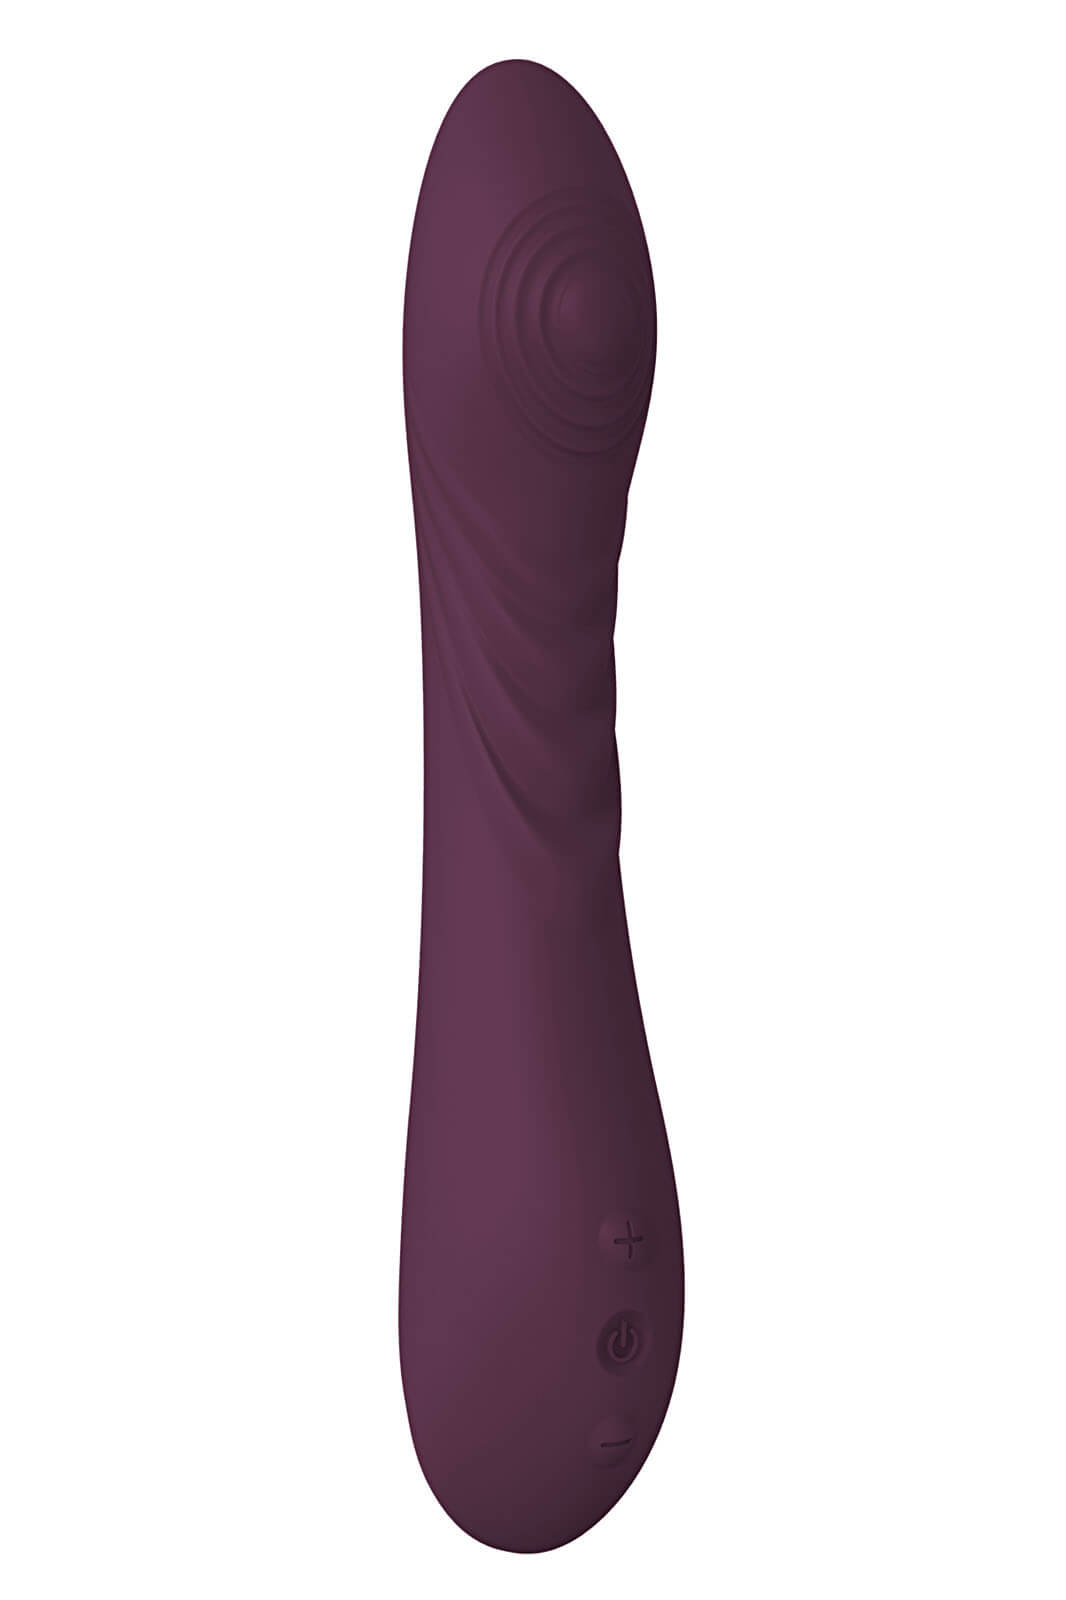 Dream Toys Essentials Tapping Power Vibe (Purple), pulzující vibrátor